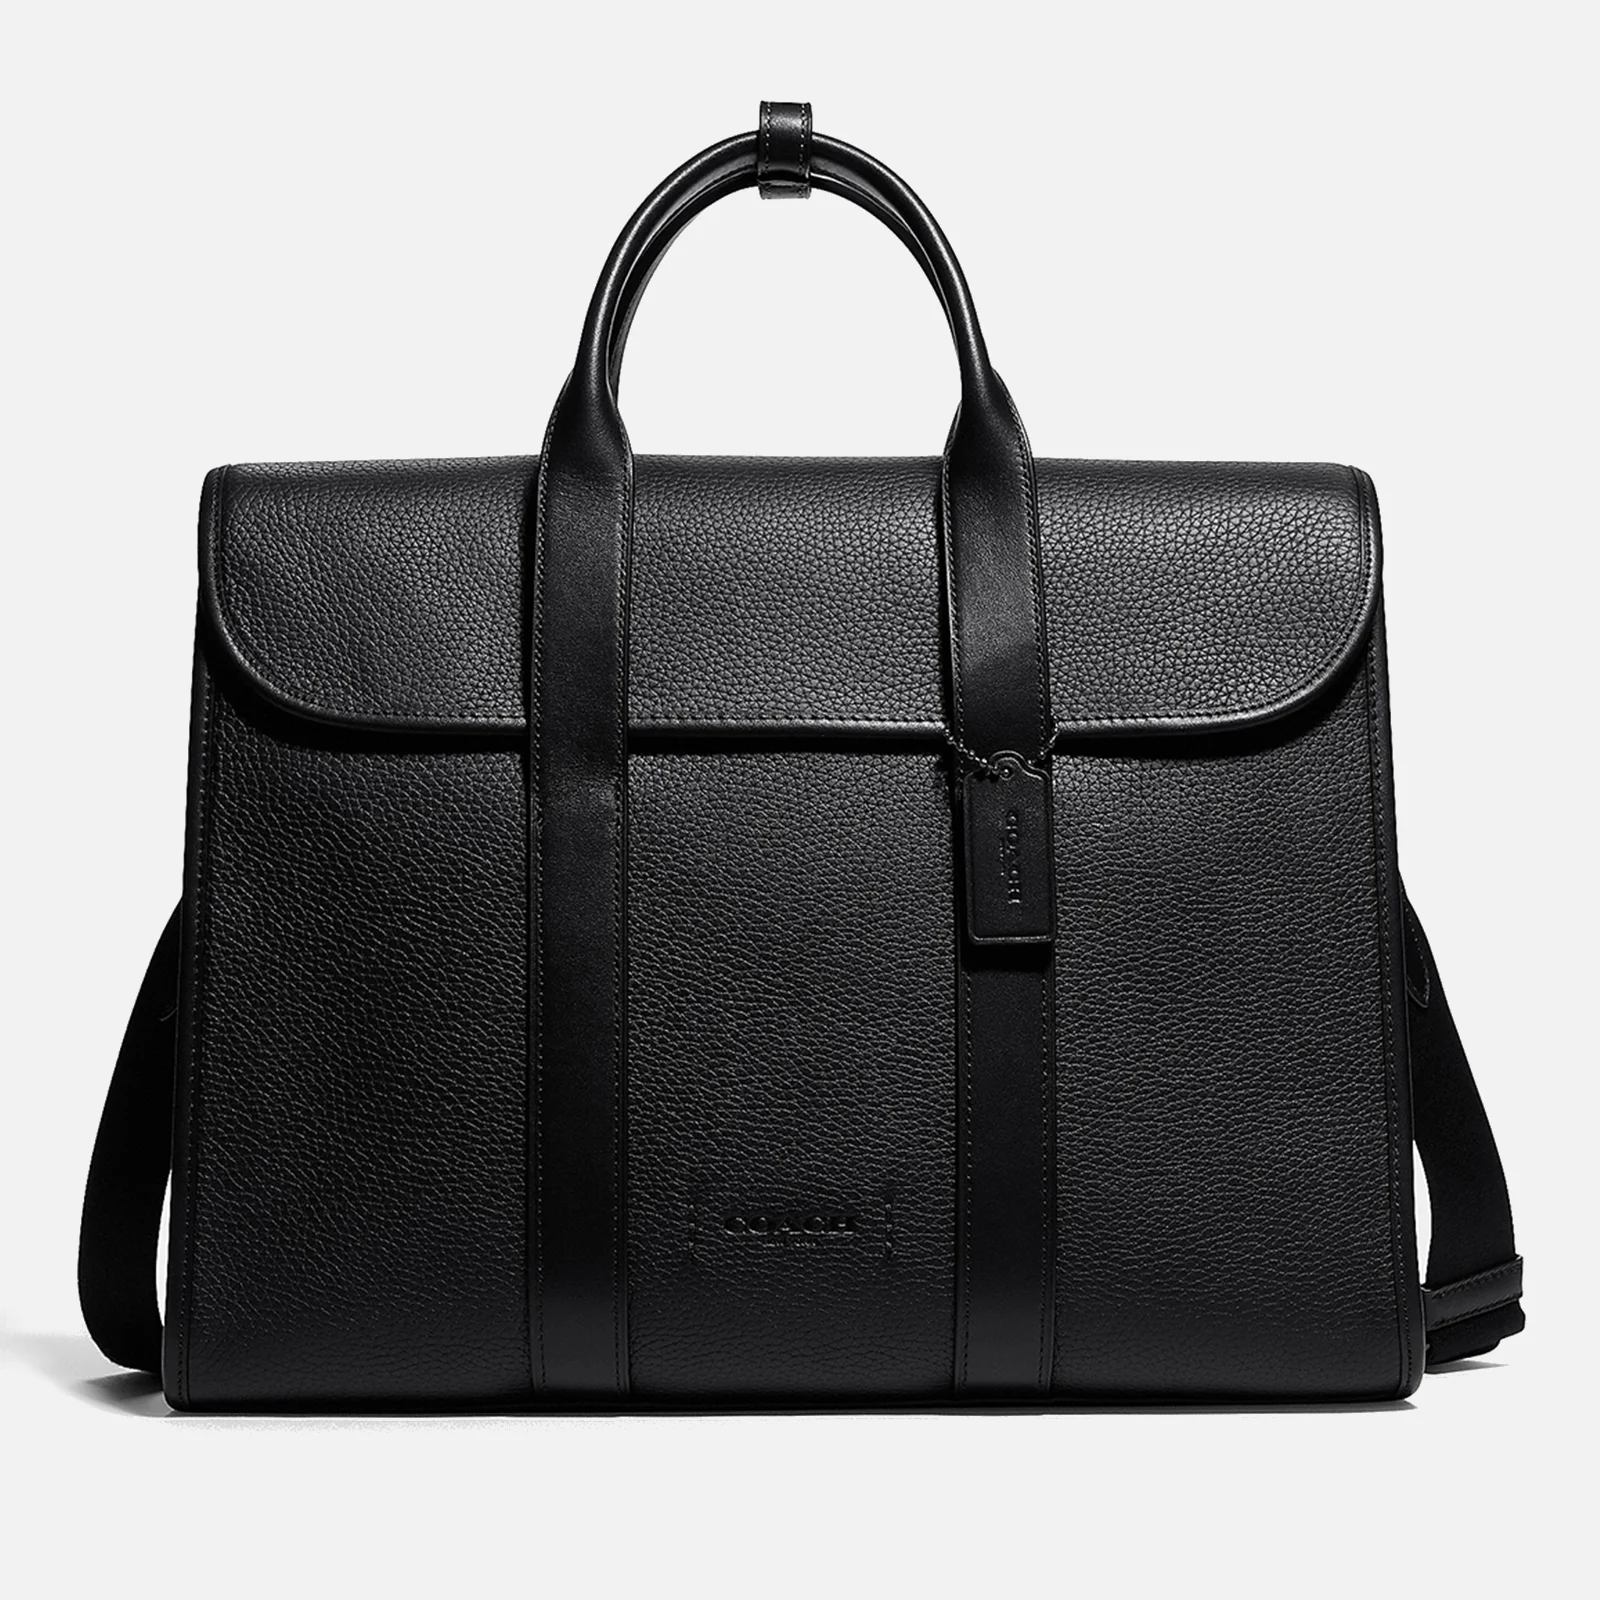 Coach Gotham Portfolio Faux Leather Bag Image 1